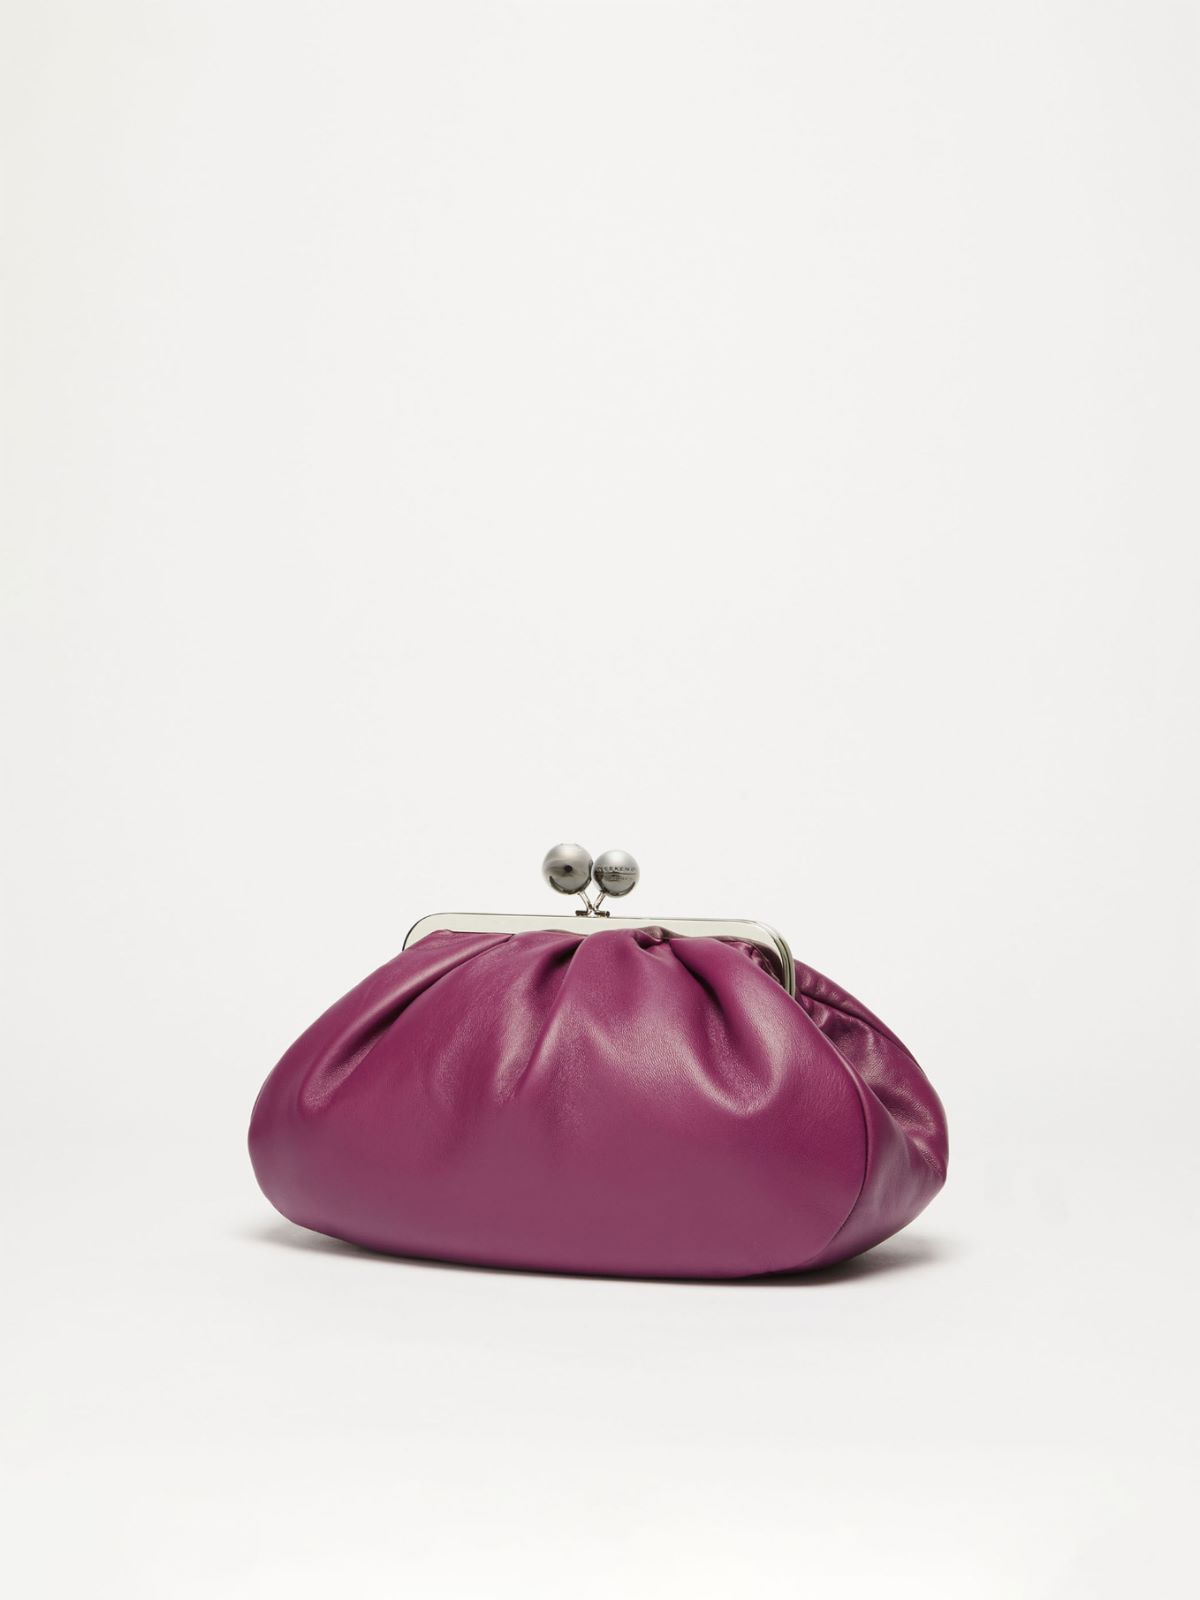 Medium Pasticcino Bag in nappa leather - PURPLE - Weekend Max Mara - 2